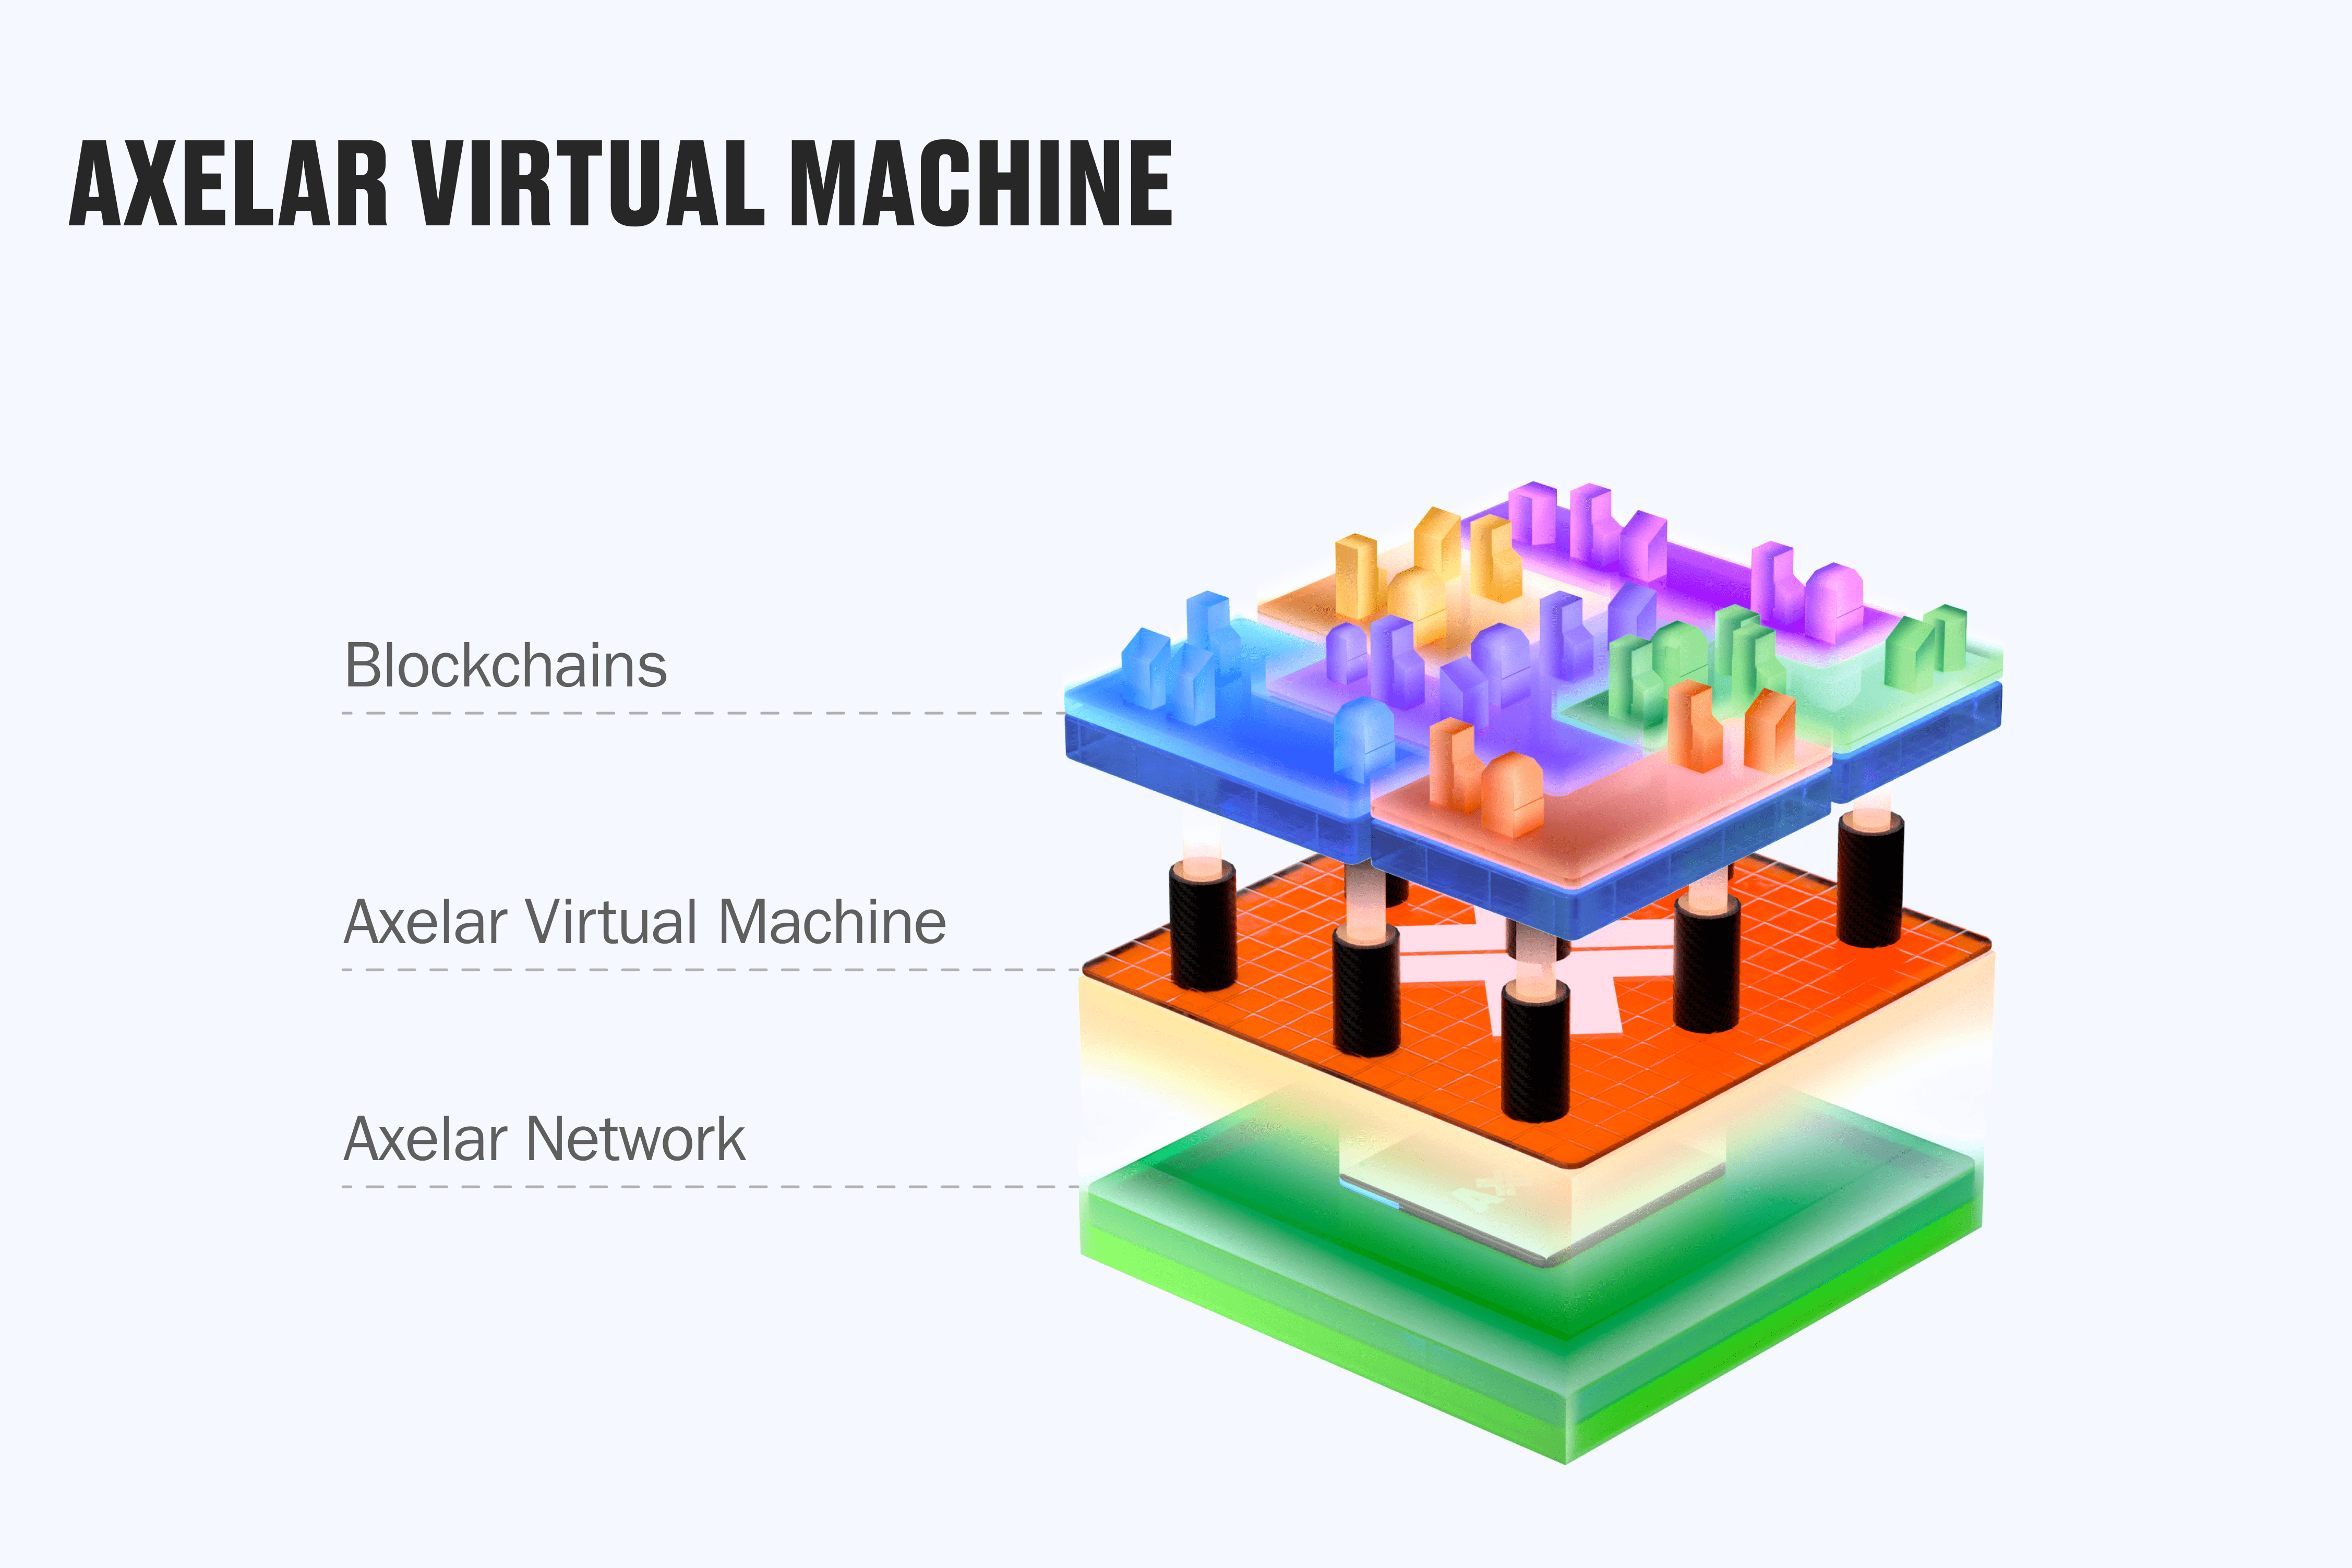 Axelar Virtual Machine